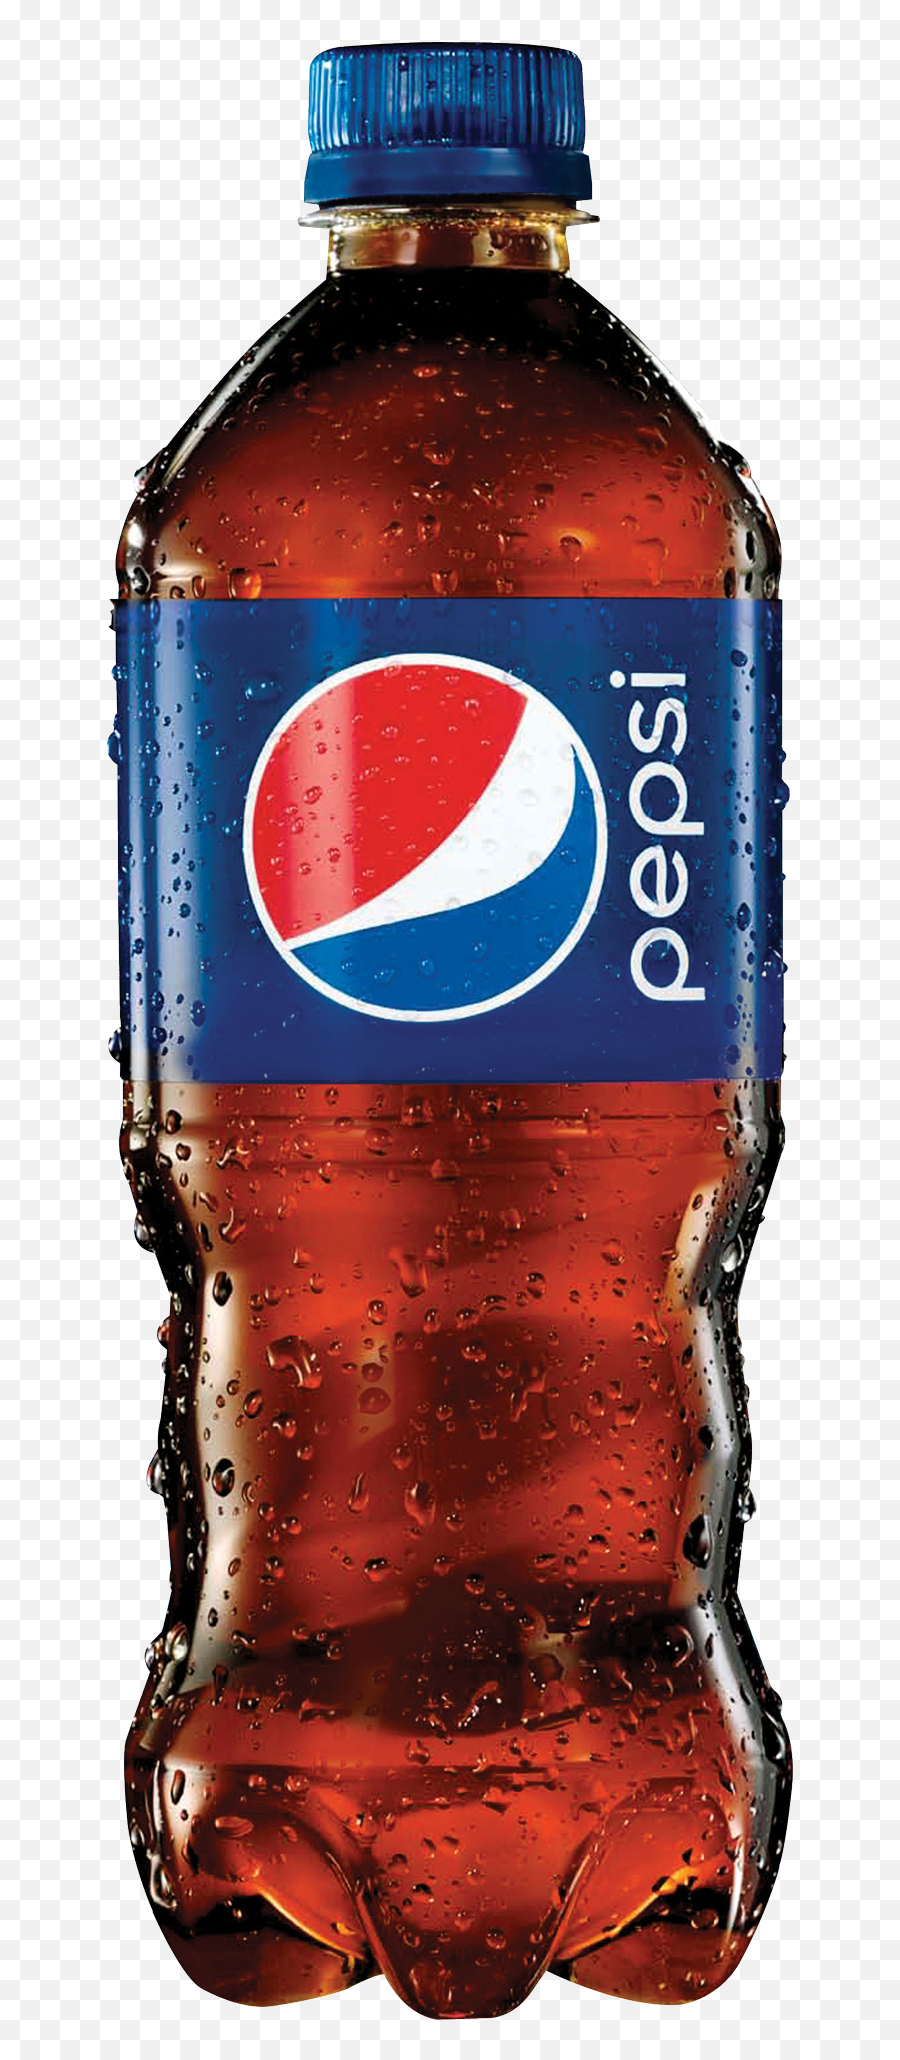 Download Pepsi Png Image For Free - Pepsi Bottle Transparent,Bottle Cap Png